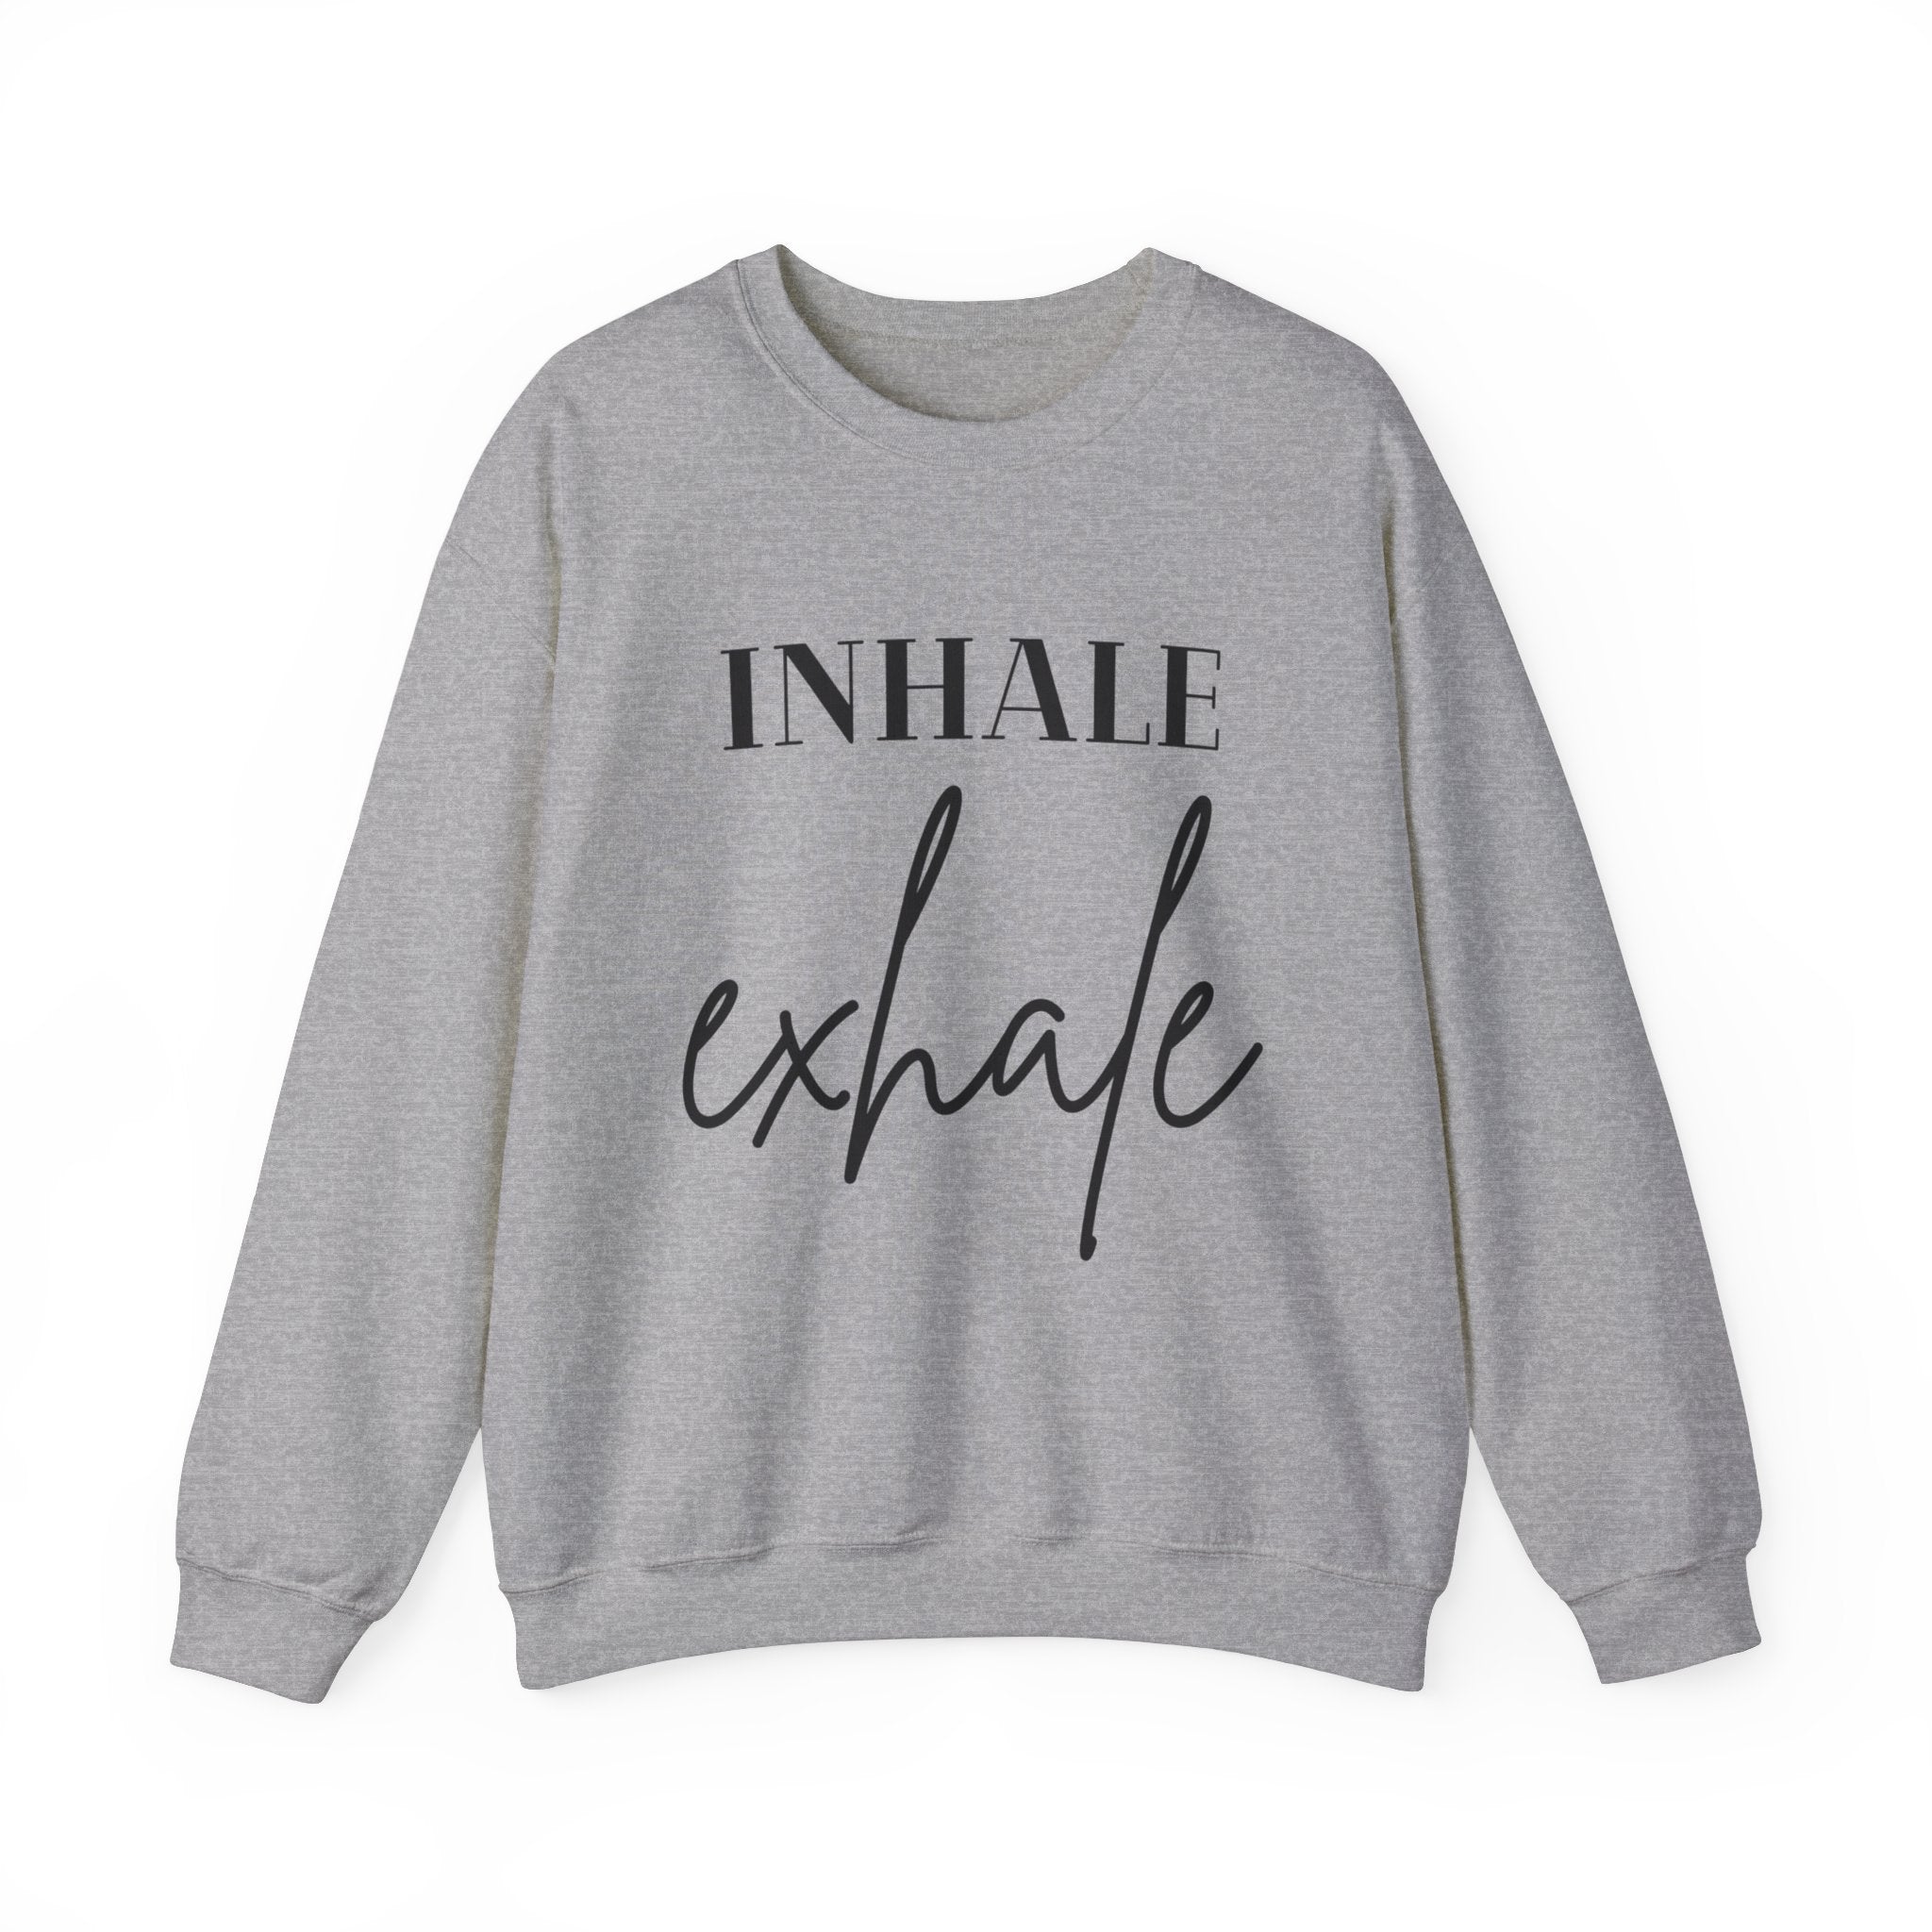 Inhale Exhale Sweatshirt, Women Sweatshirt, Fall Sweatshirt, Yoga Sweatshirt, Winter Sweatshirt, Christmas Sweatshirt,Gift For Her,